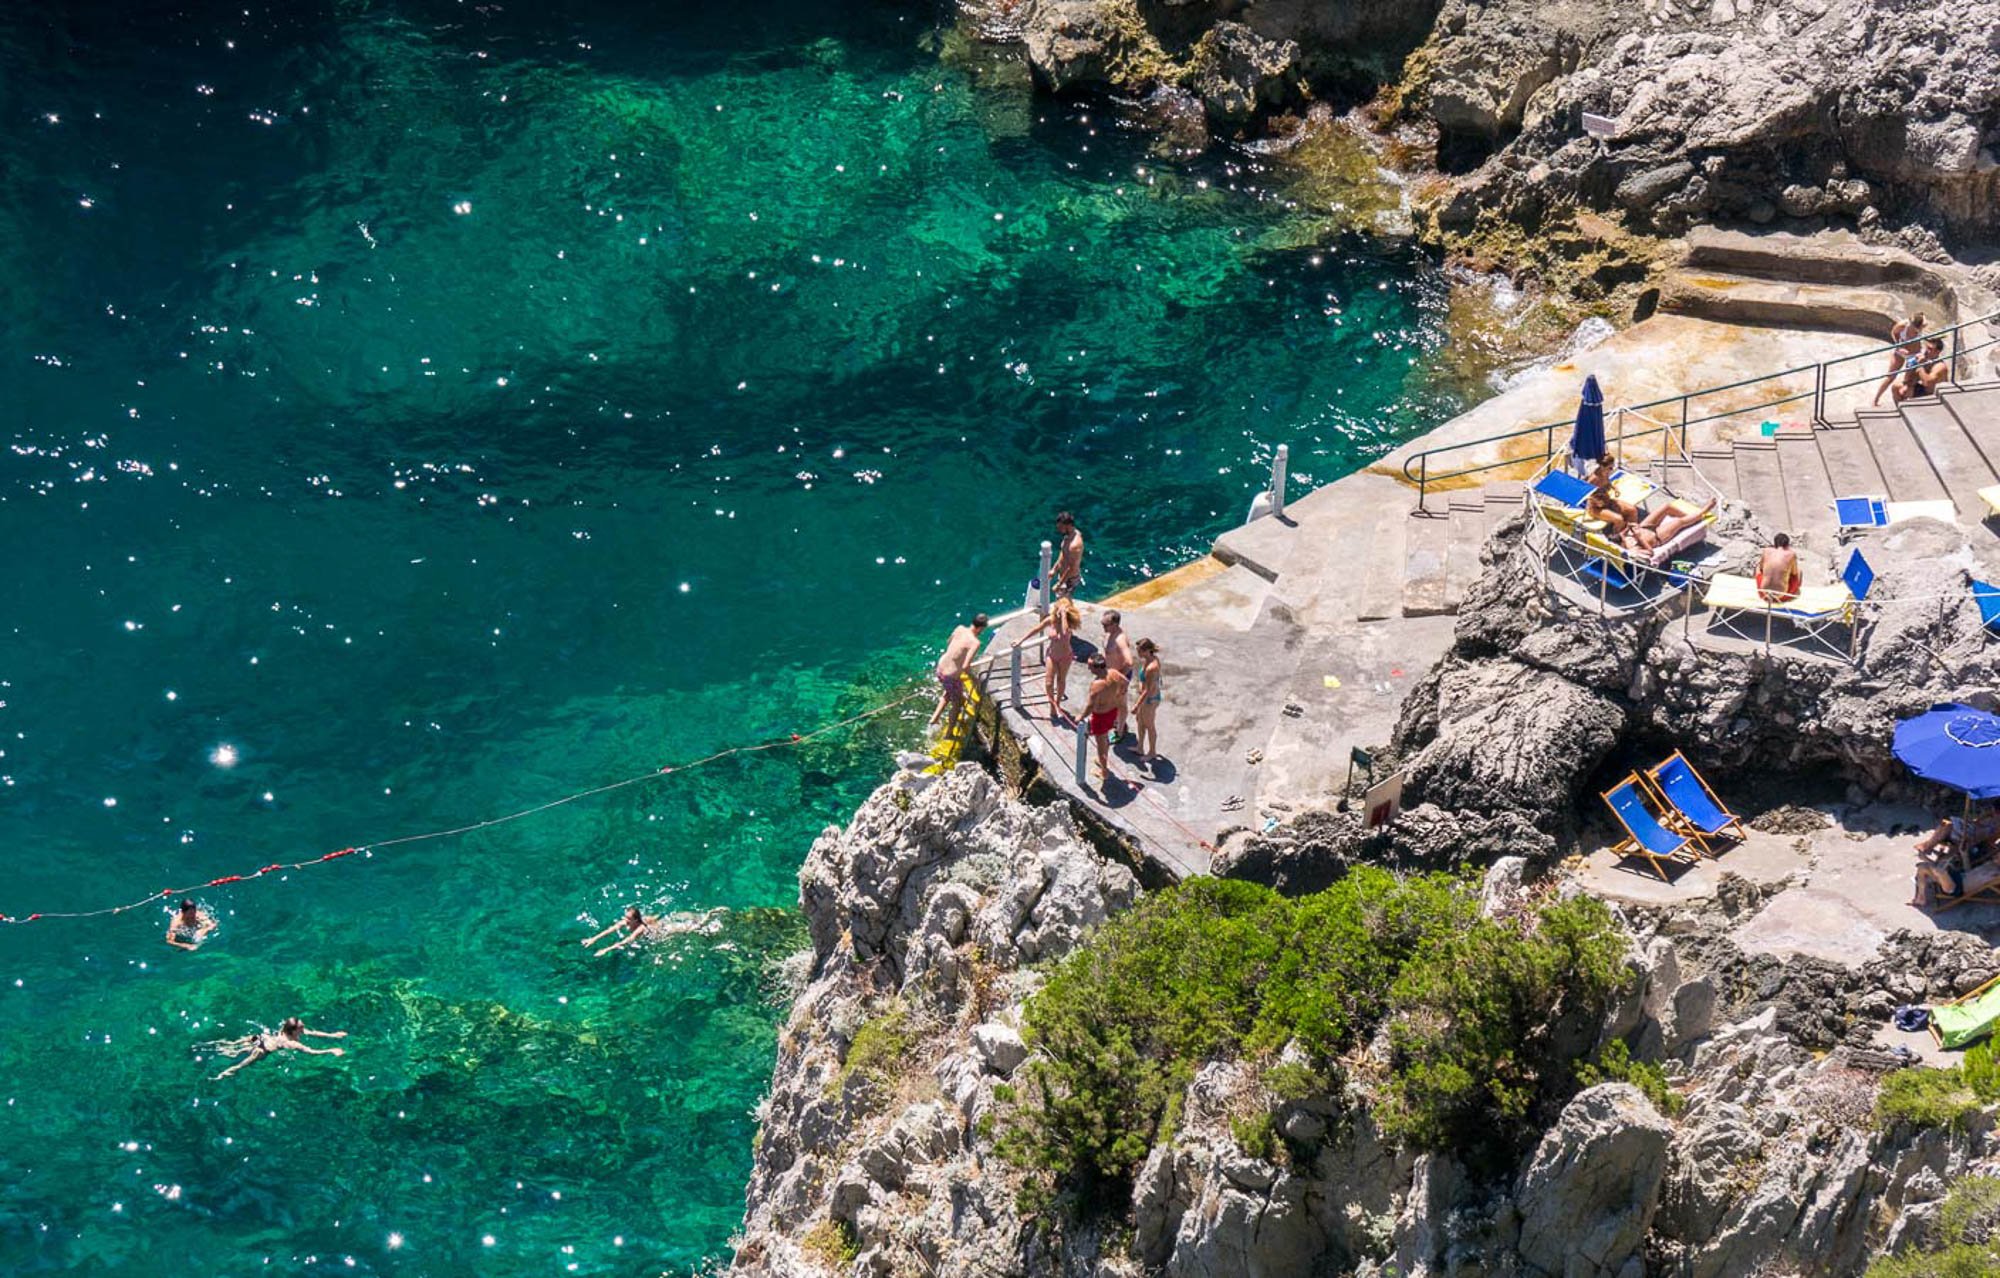 Another beach club Capri option across from the Faraglioni is Da Luigi ai Faraglioni.